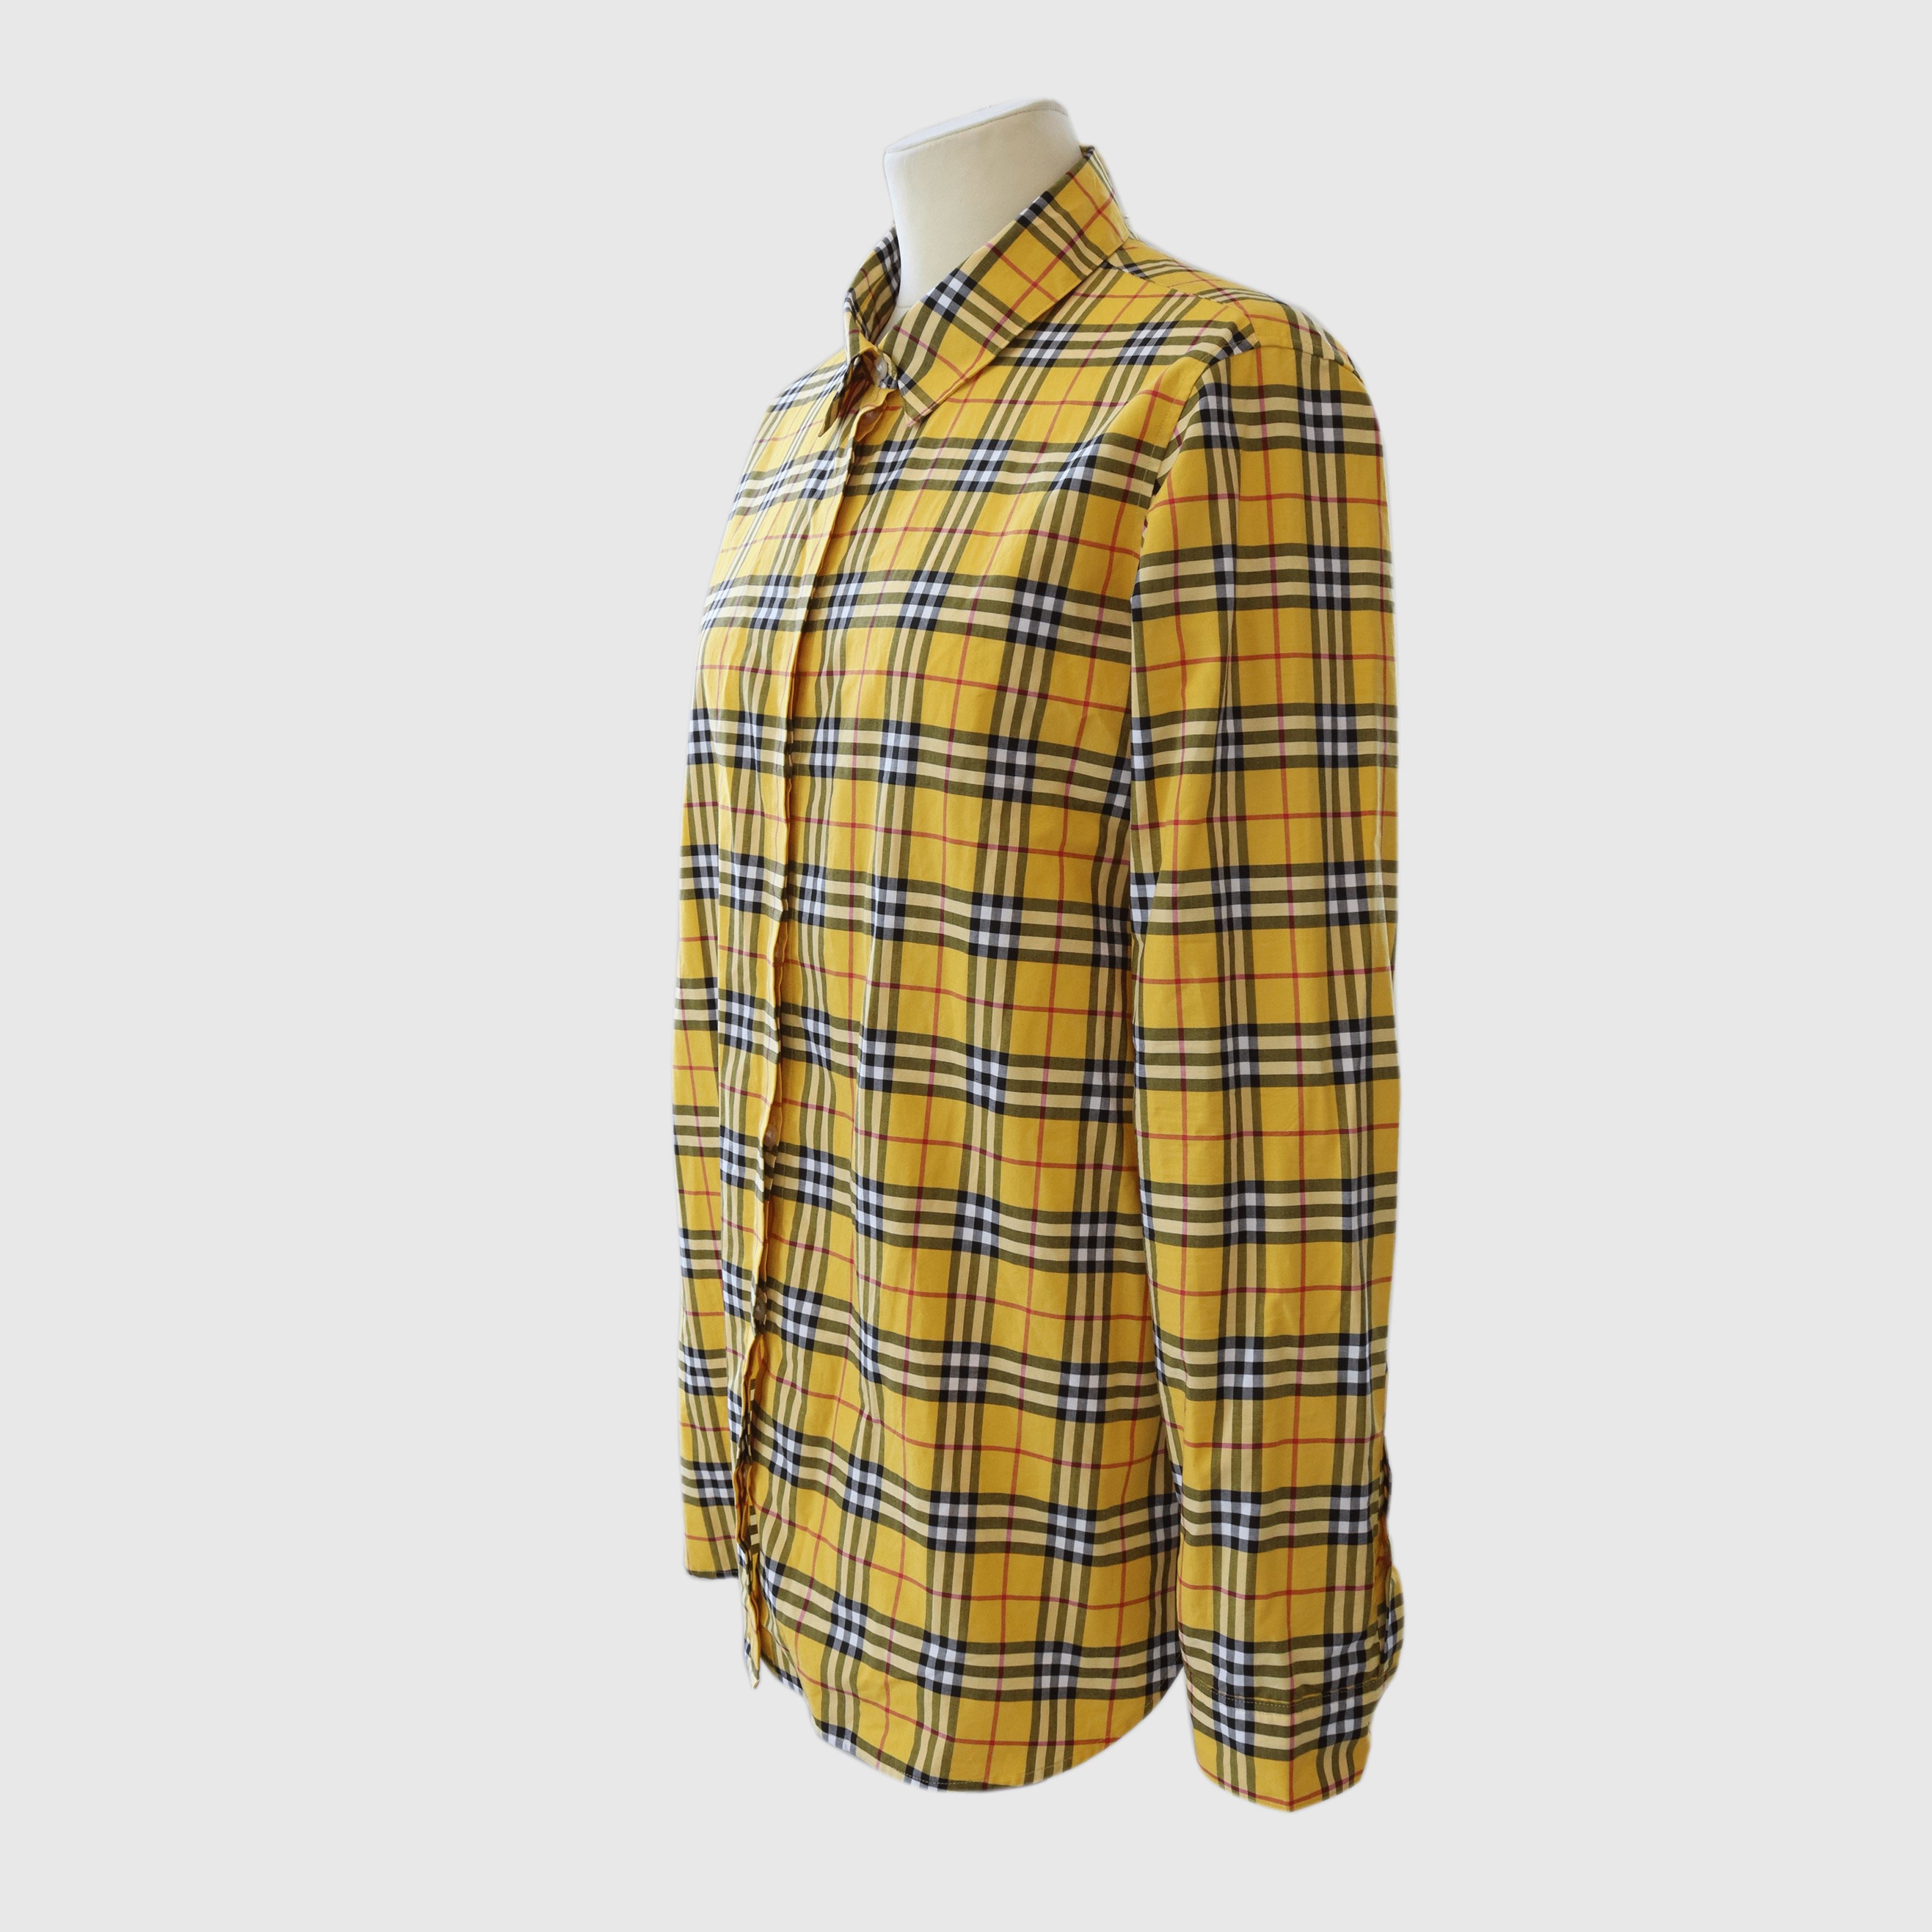 Yellow/Multicolor Checkered Shirt